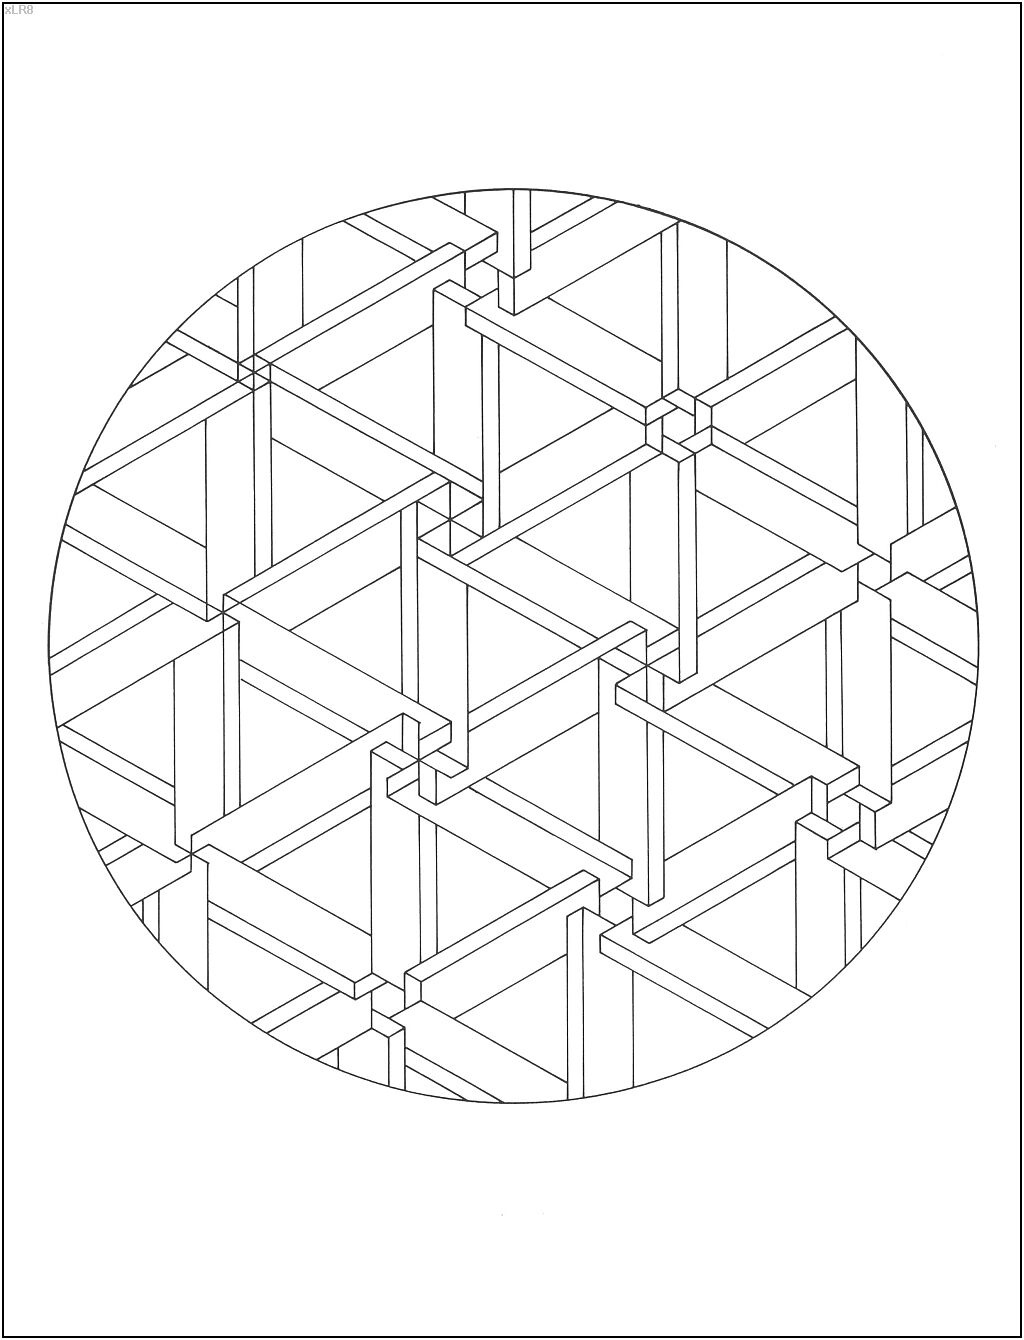 Koichi Sato. Optical illusion 14